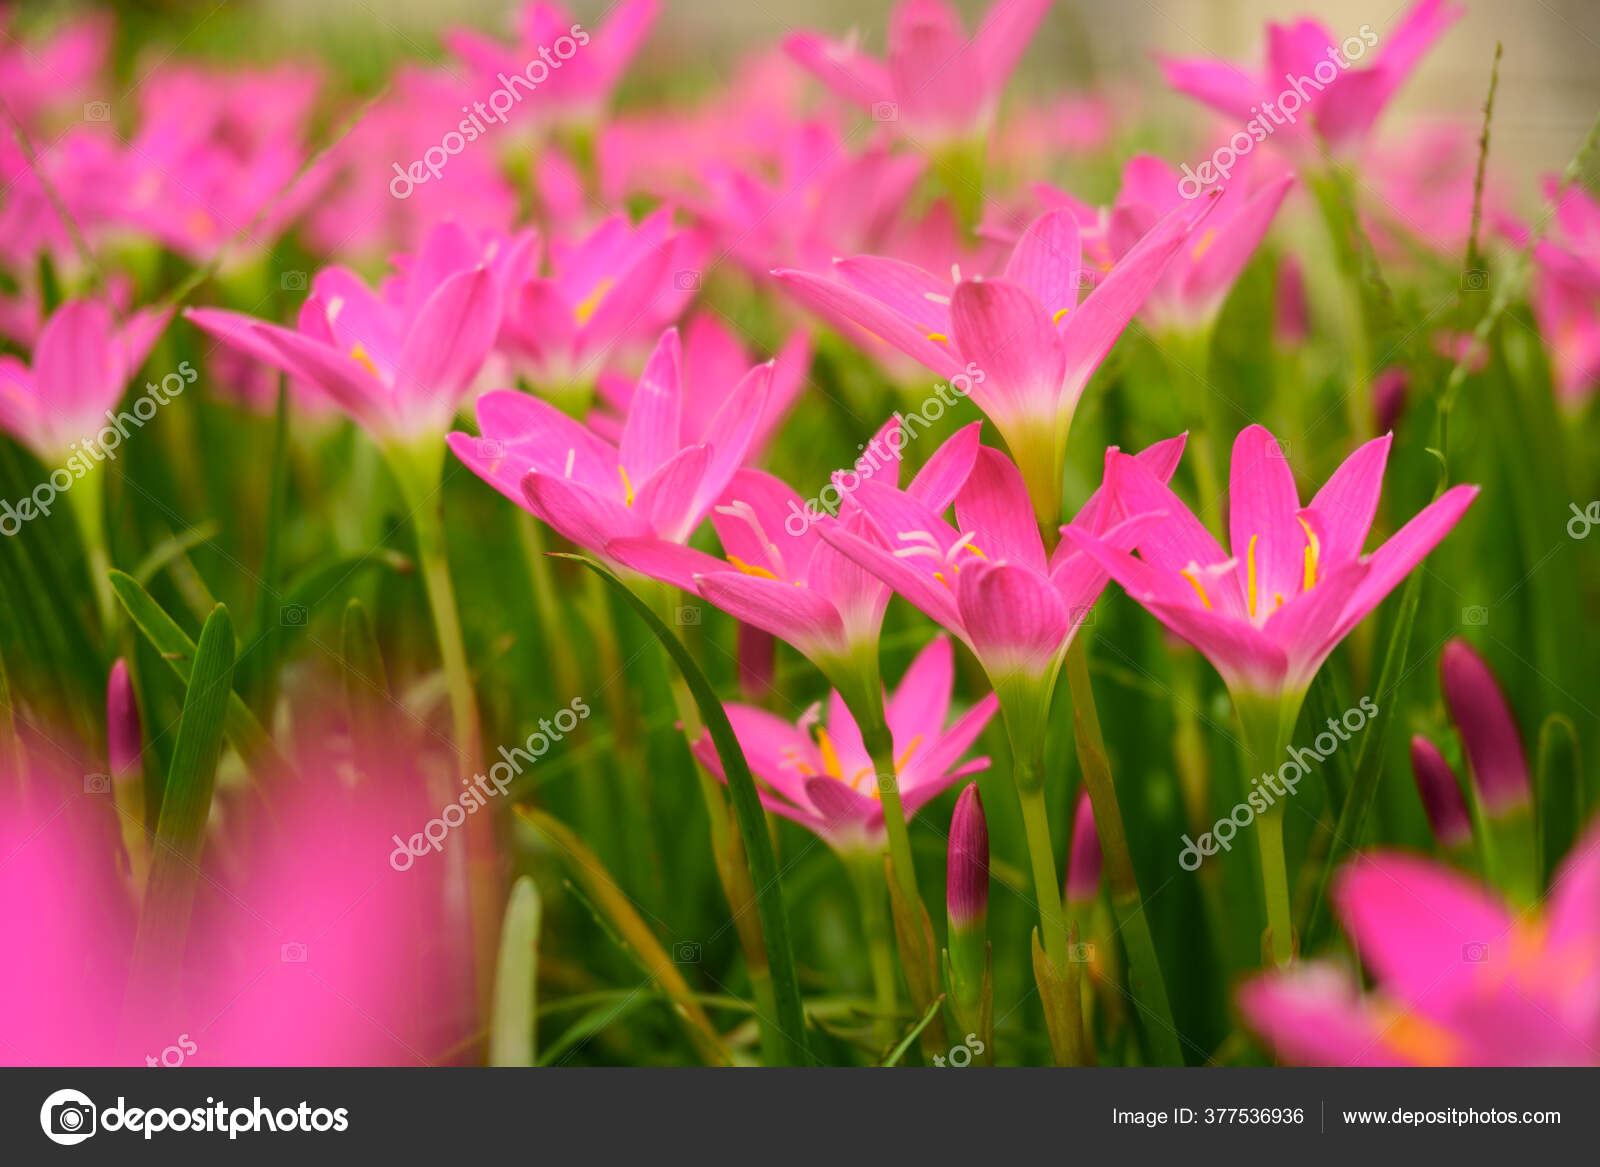 Indah Sedikit Lembut Merah Muda Kelopak Bunga Lili Hujan Pada Stok Foto C Aimful 377536936